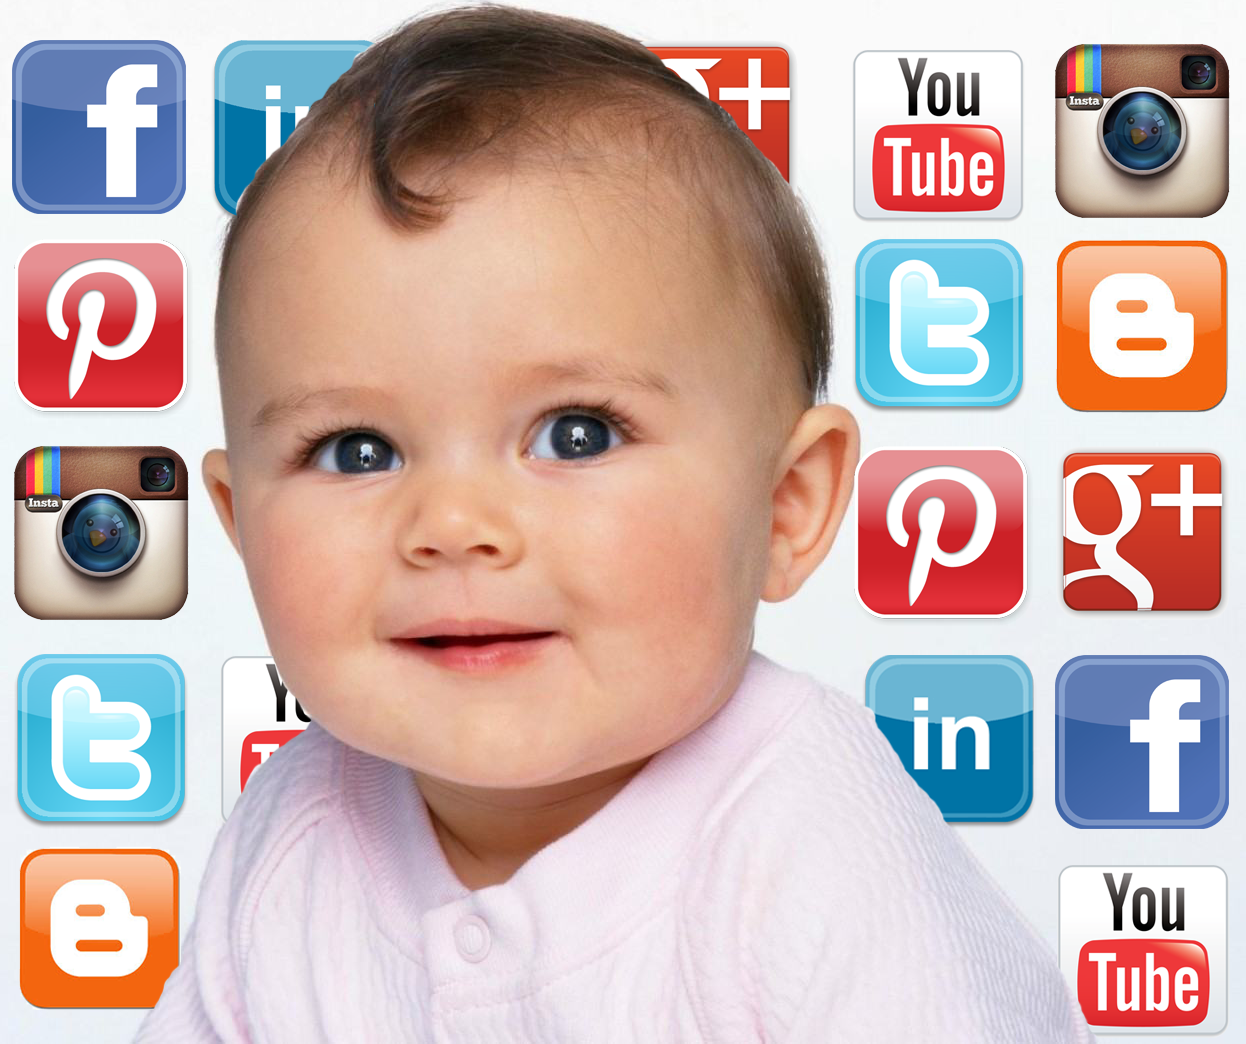 Newbies, like babies, need to start exploring social media